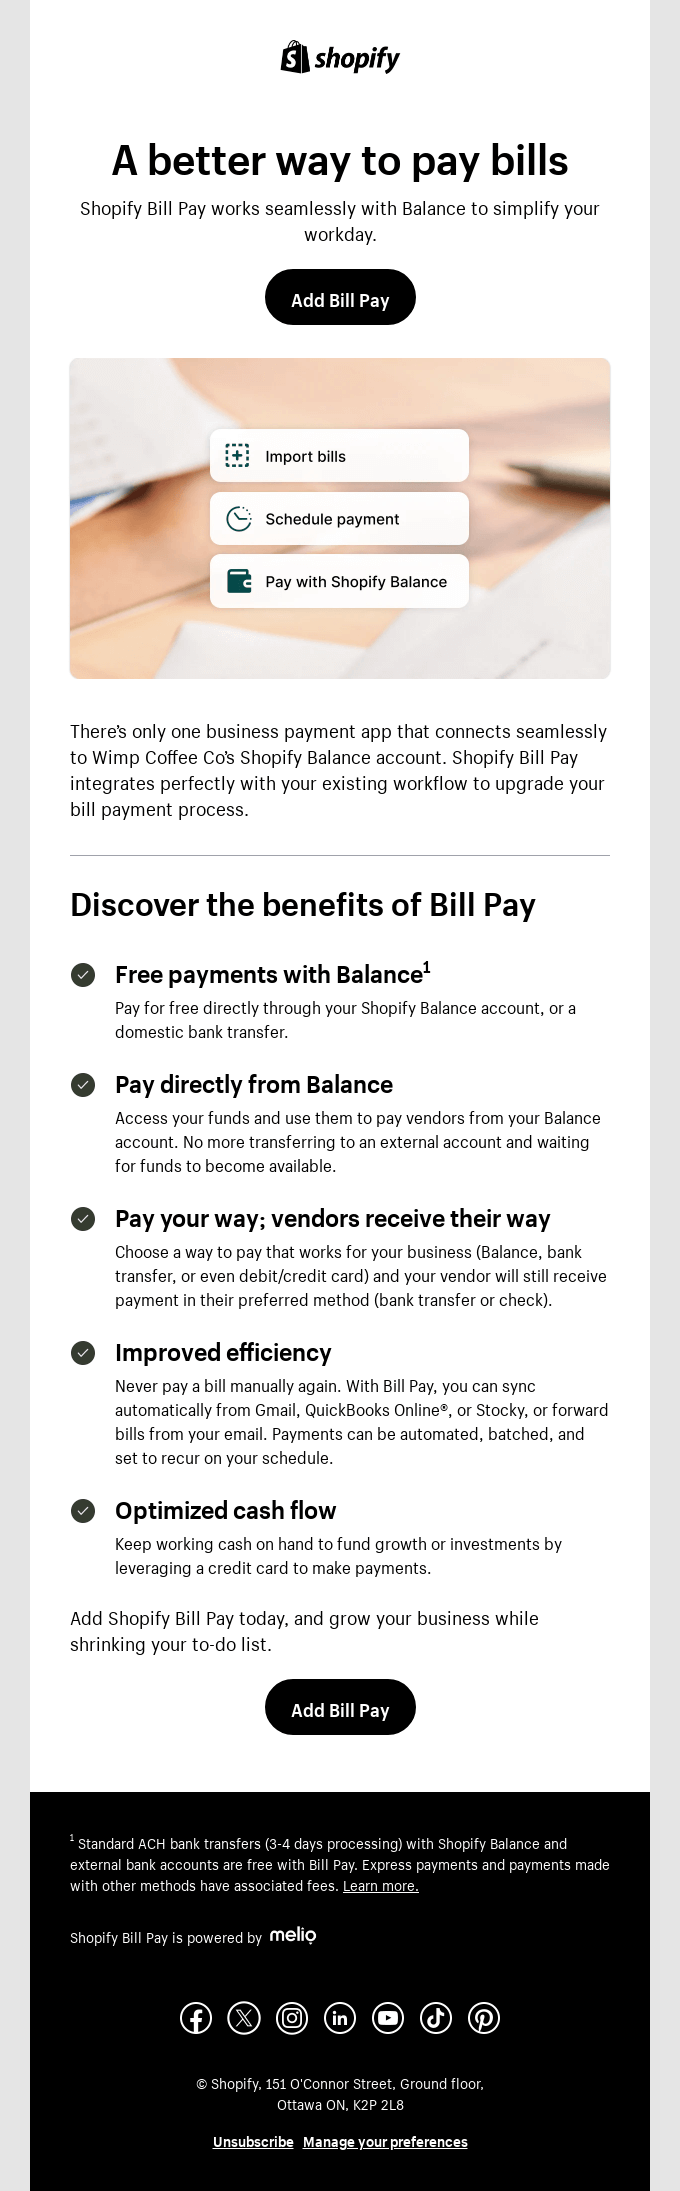 Bills. Balance. Benefits.